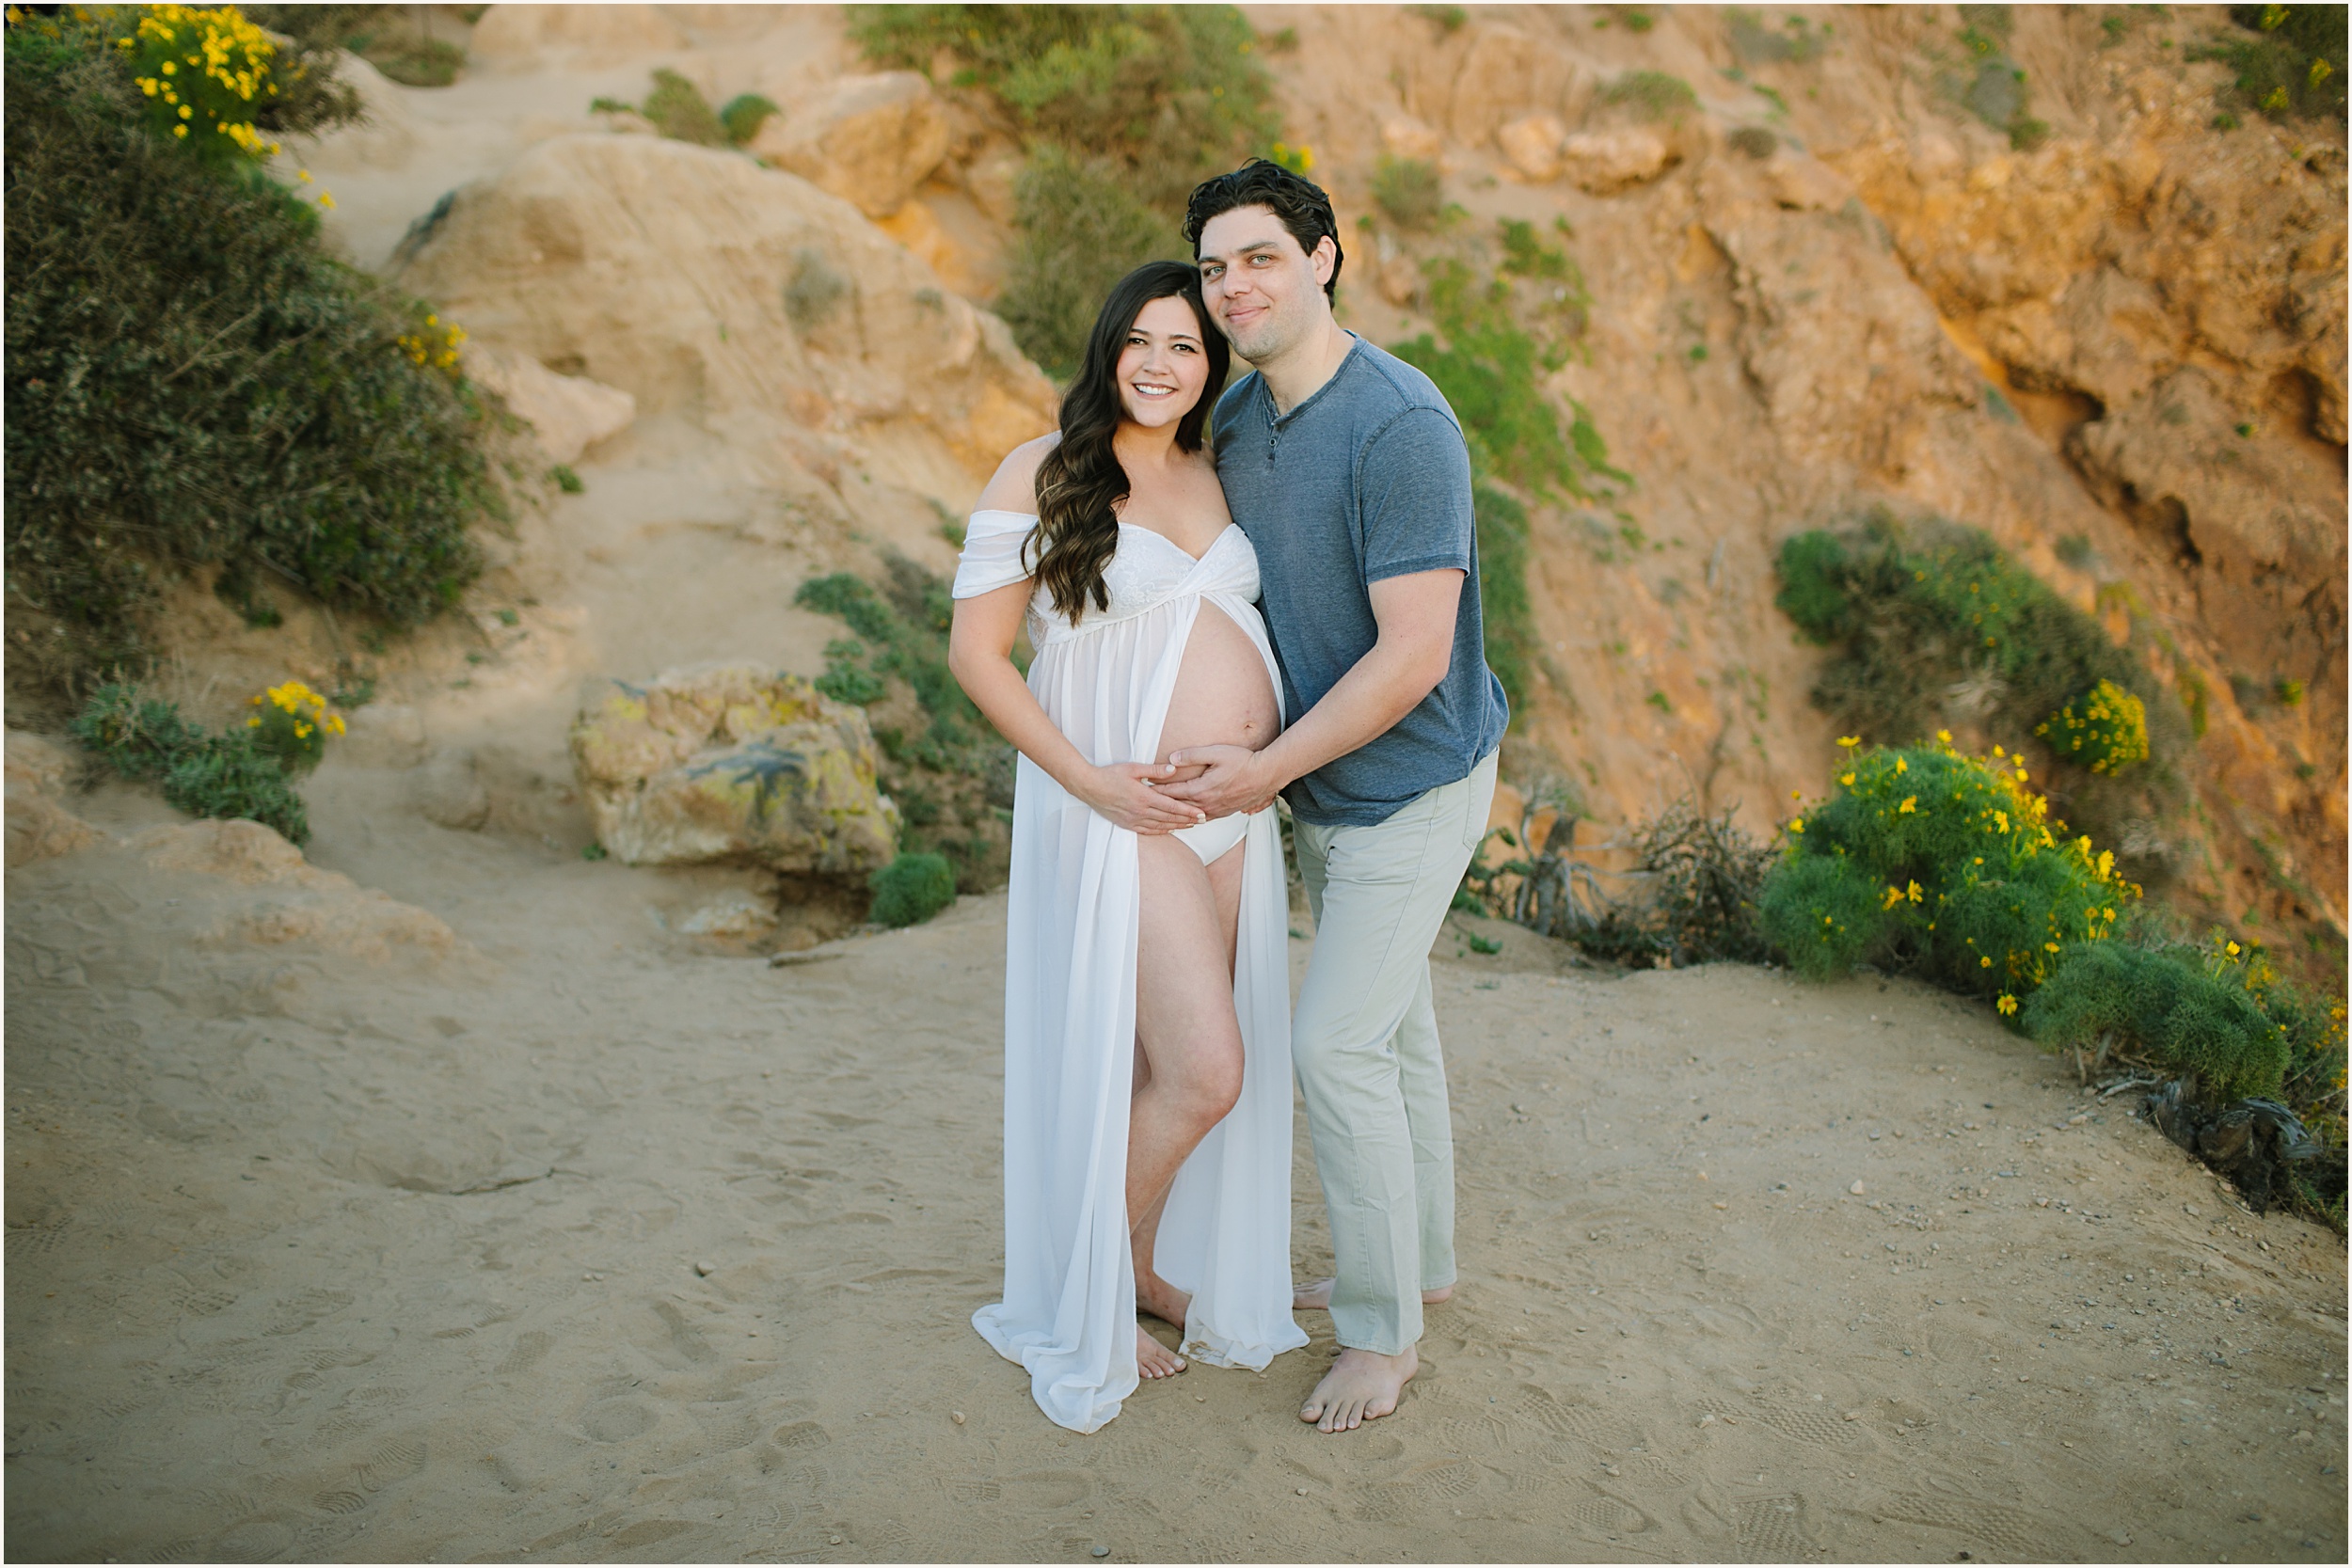 Michelle-and-Chris_0006 Michelle & Chris | Dreamy Maternity Shoot in Malibu, CA